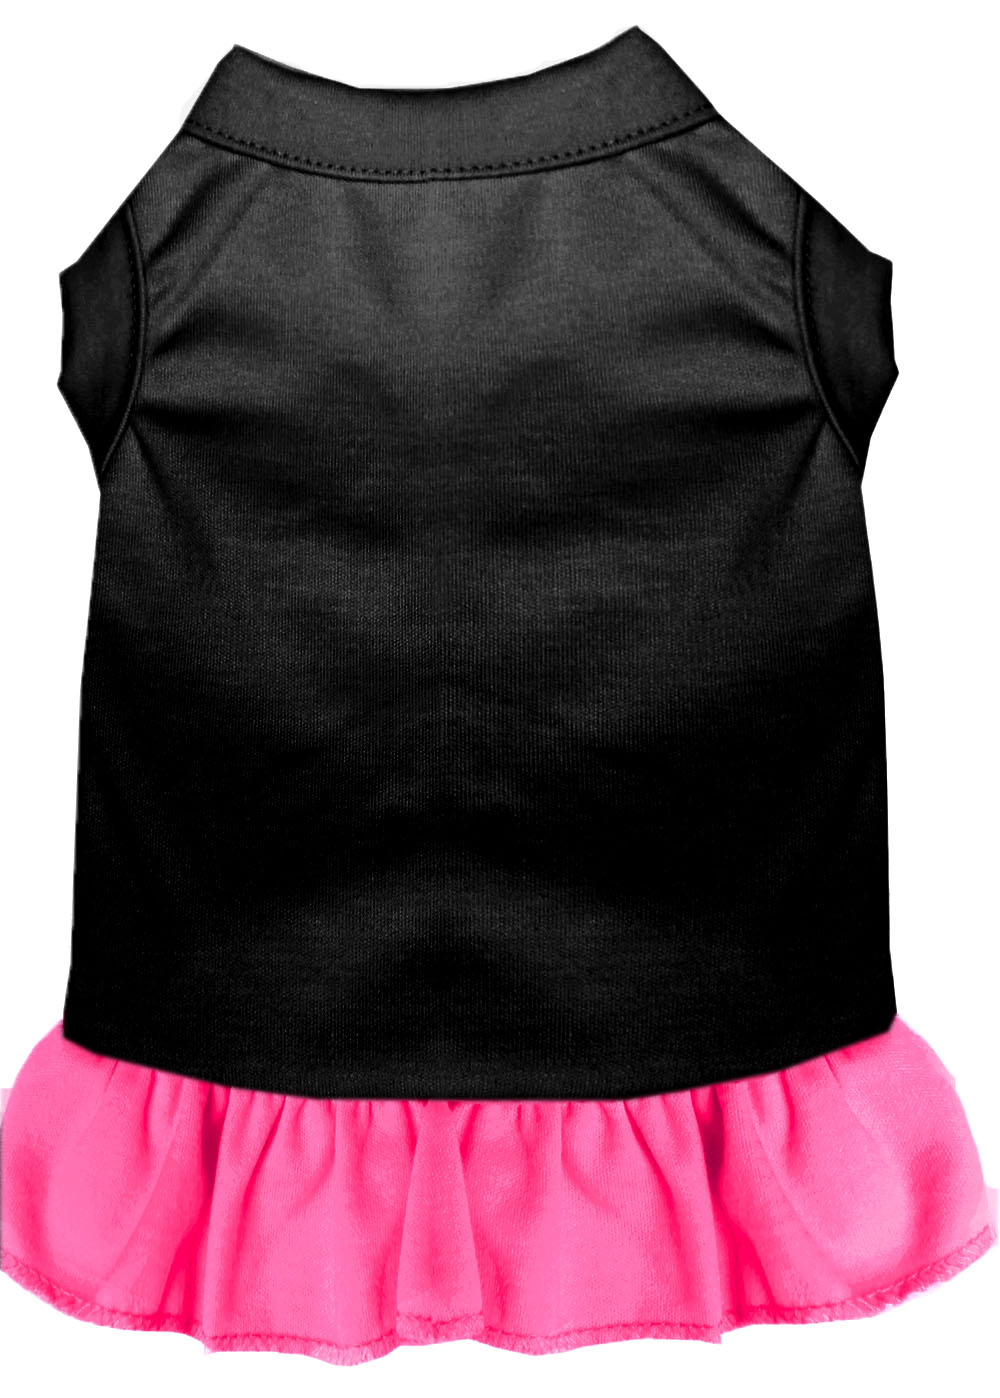 Plain Pet Dress Black with Bright Pink Sm